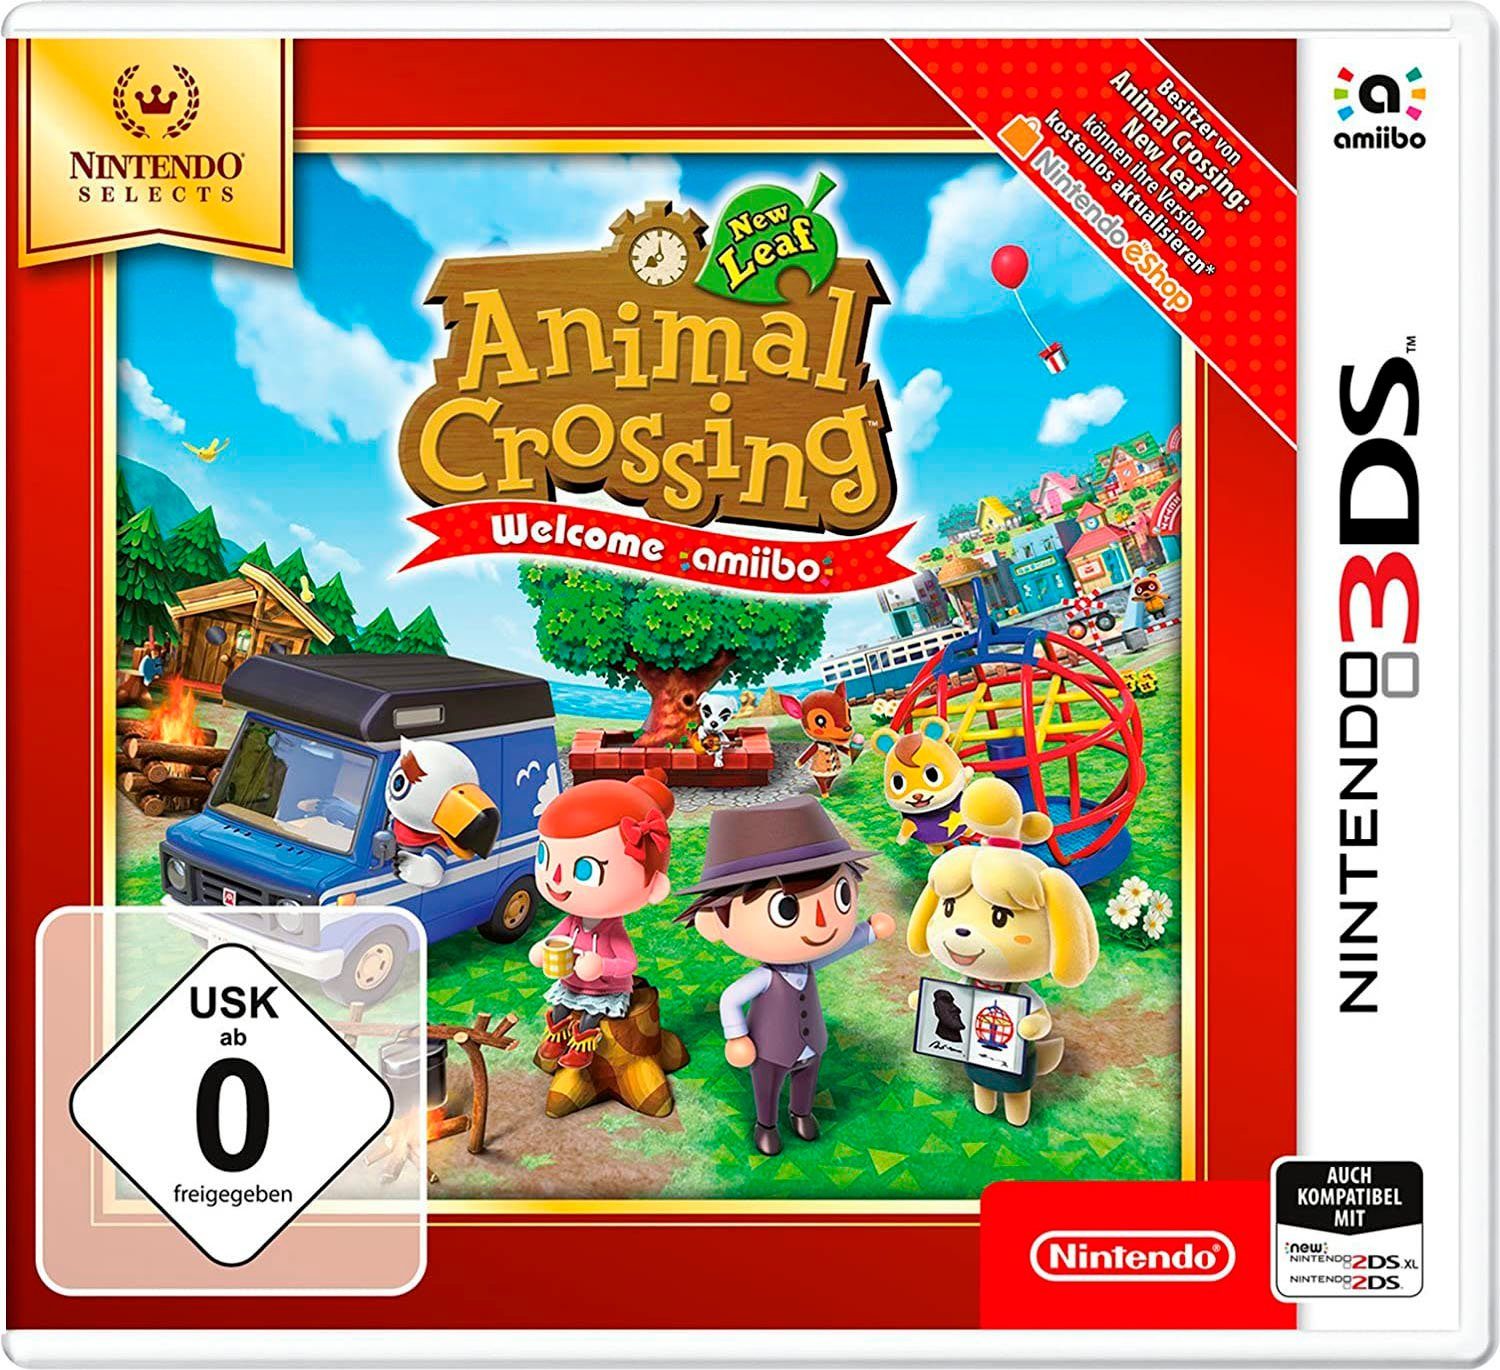 ANIMAL CROSSING - Nintendo NEW AMIIBO 3DS WELCOME LEAF